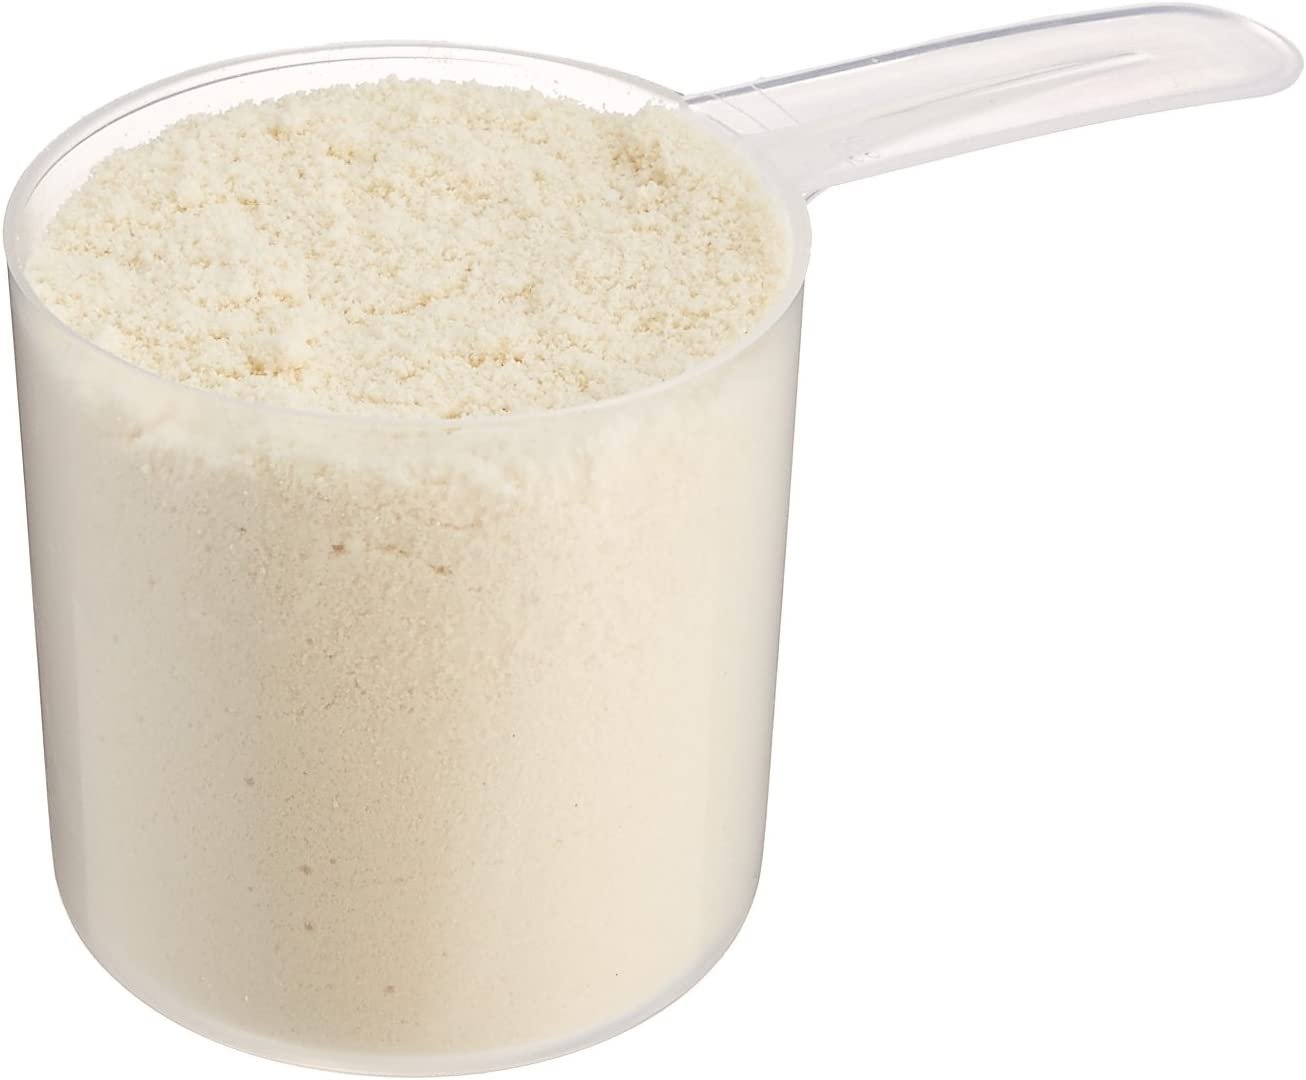 APS Nutrition Isomorph 28 Whey Protein Isolates Powder - Increase Lean Muscle Mass, Anti-Catabolic, Increase Strength & Size , Improve Nitrogen Balance- Orange Creamsicle-2 lb